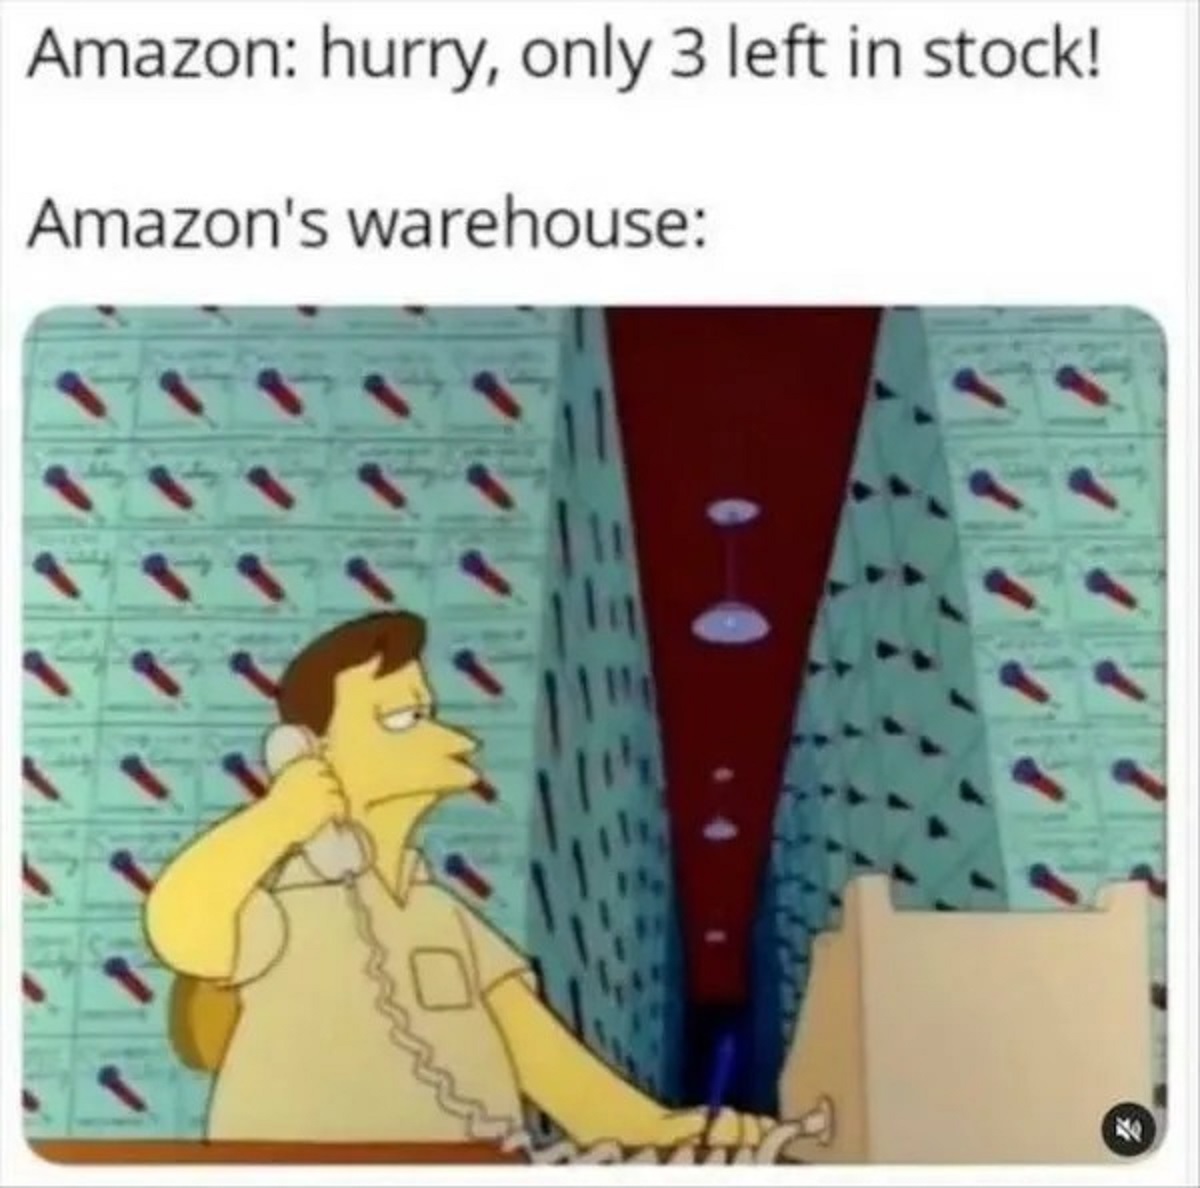 amazon hurry only 3 left in stock - Amazon hurry, only 3 left in stock! Amazon's warehouse